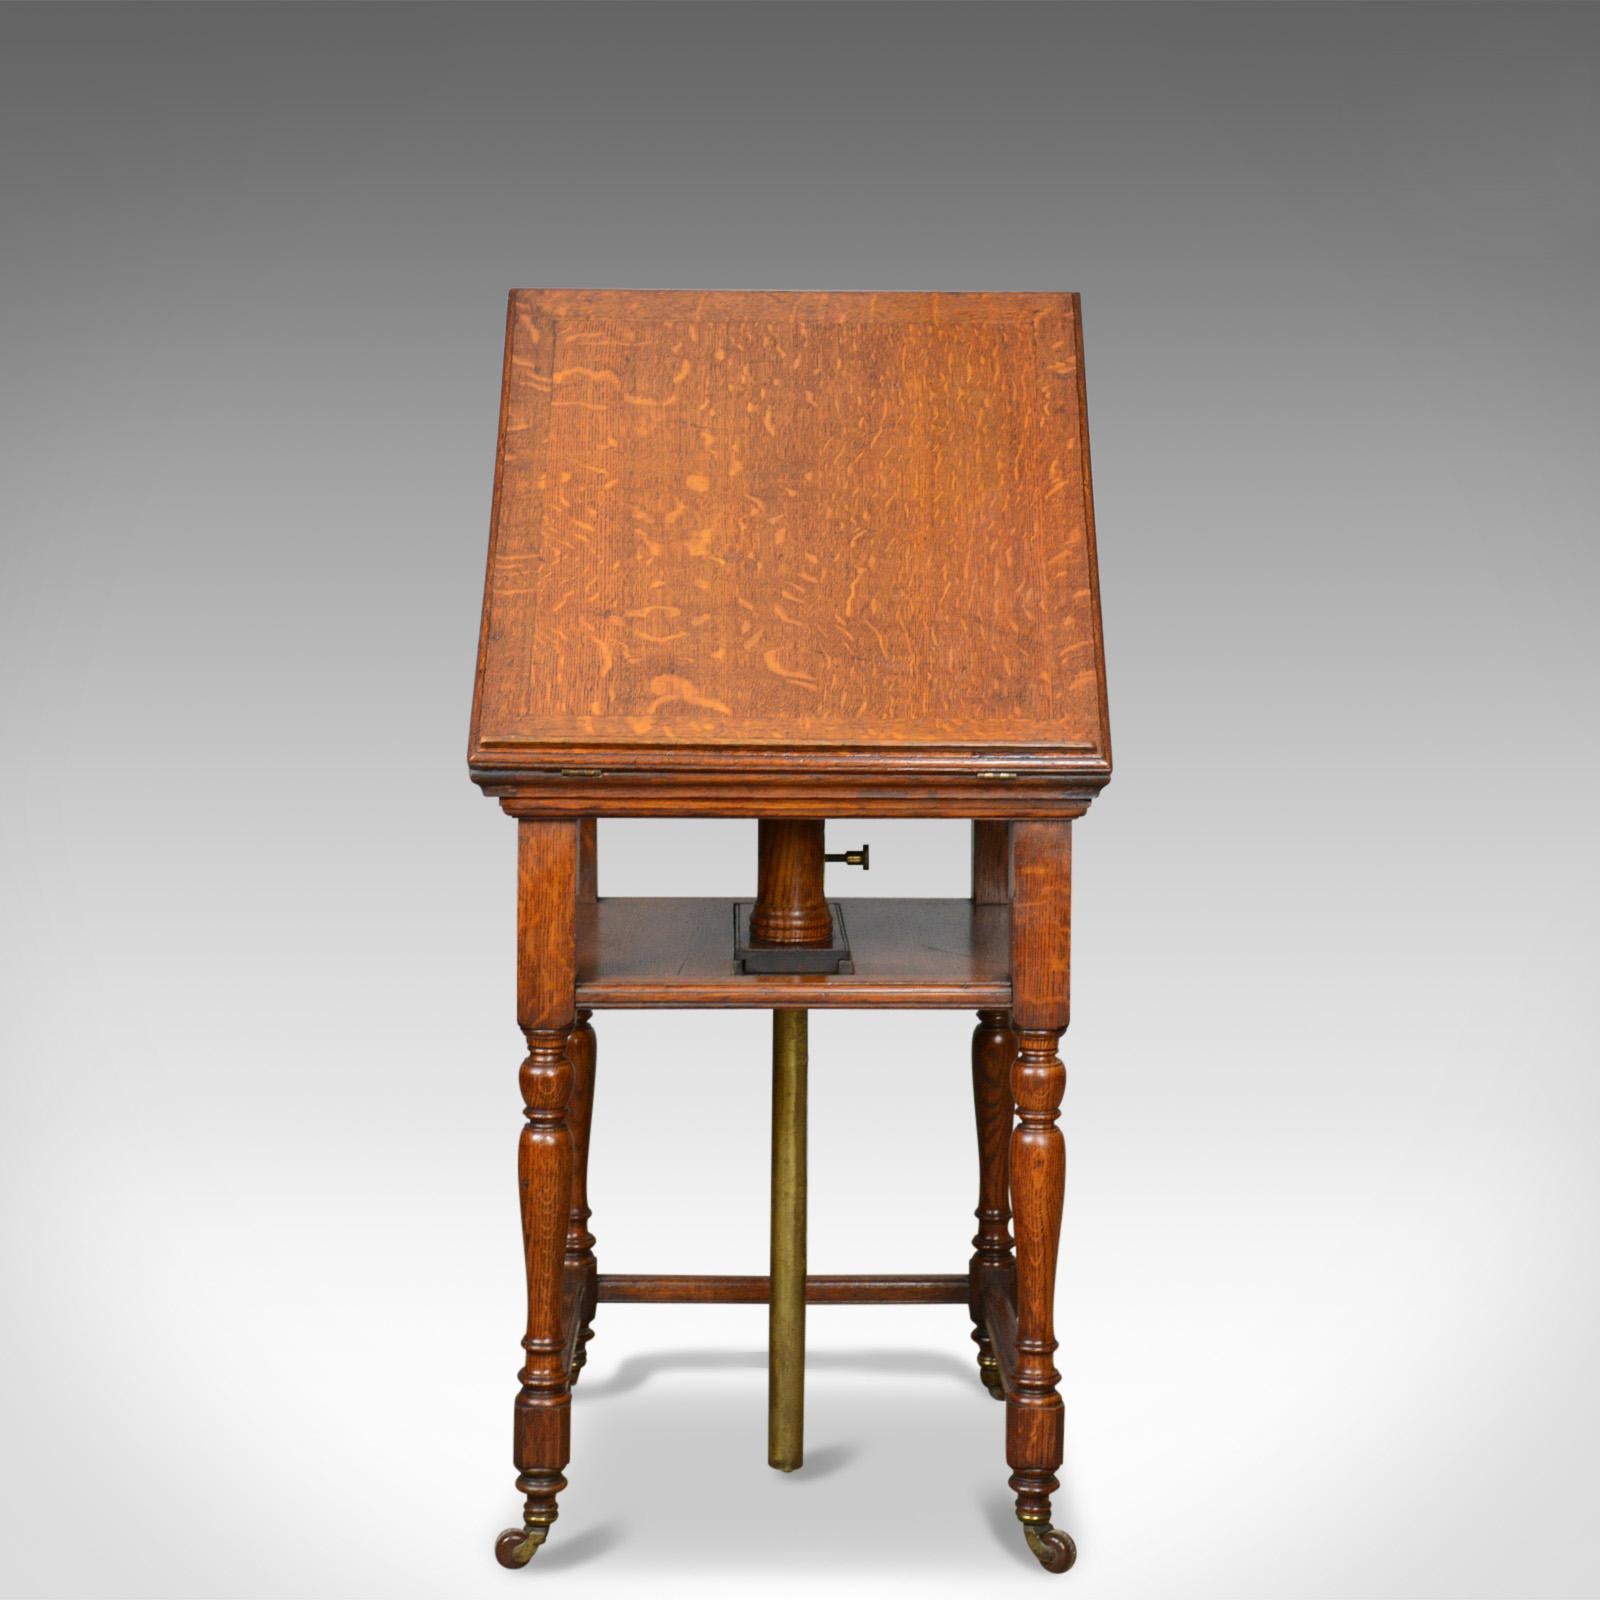 English Antique, Metamorphic, Side Table, Lectern, Oak, Library, Reading, circa 1860